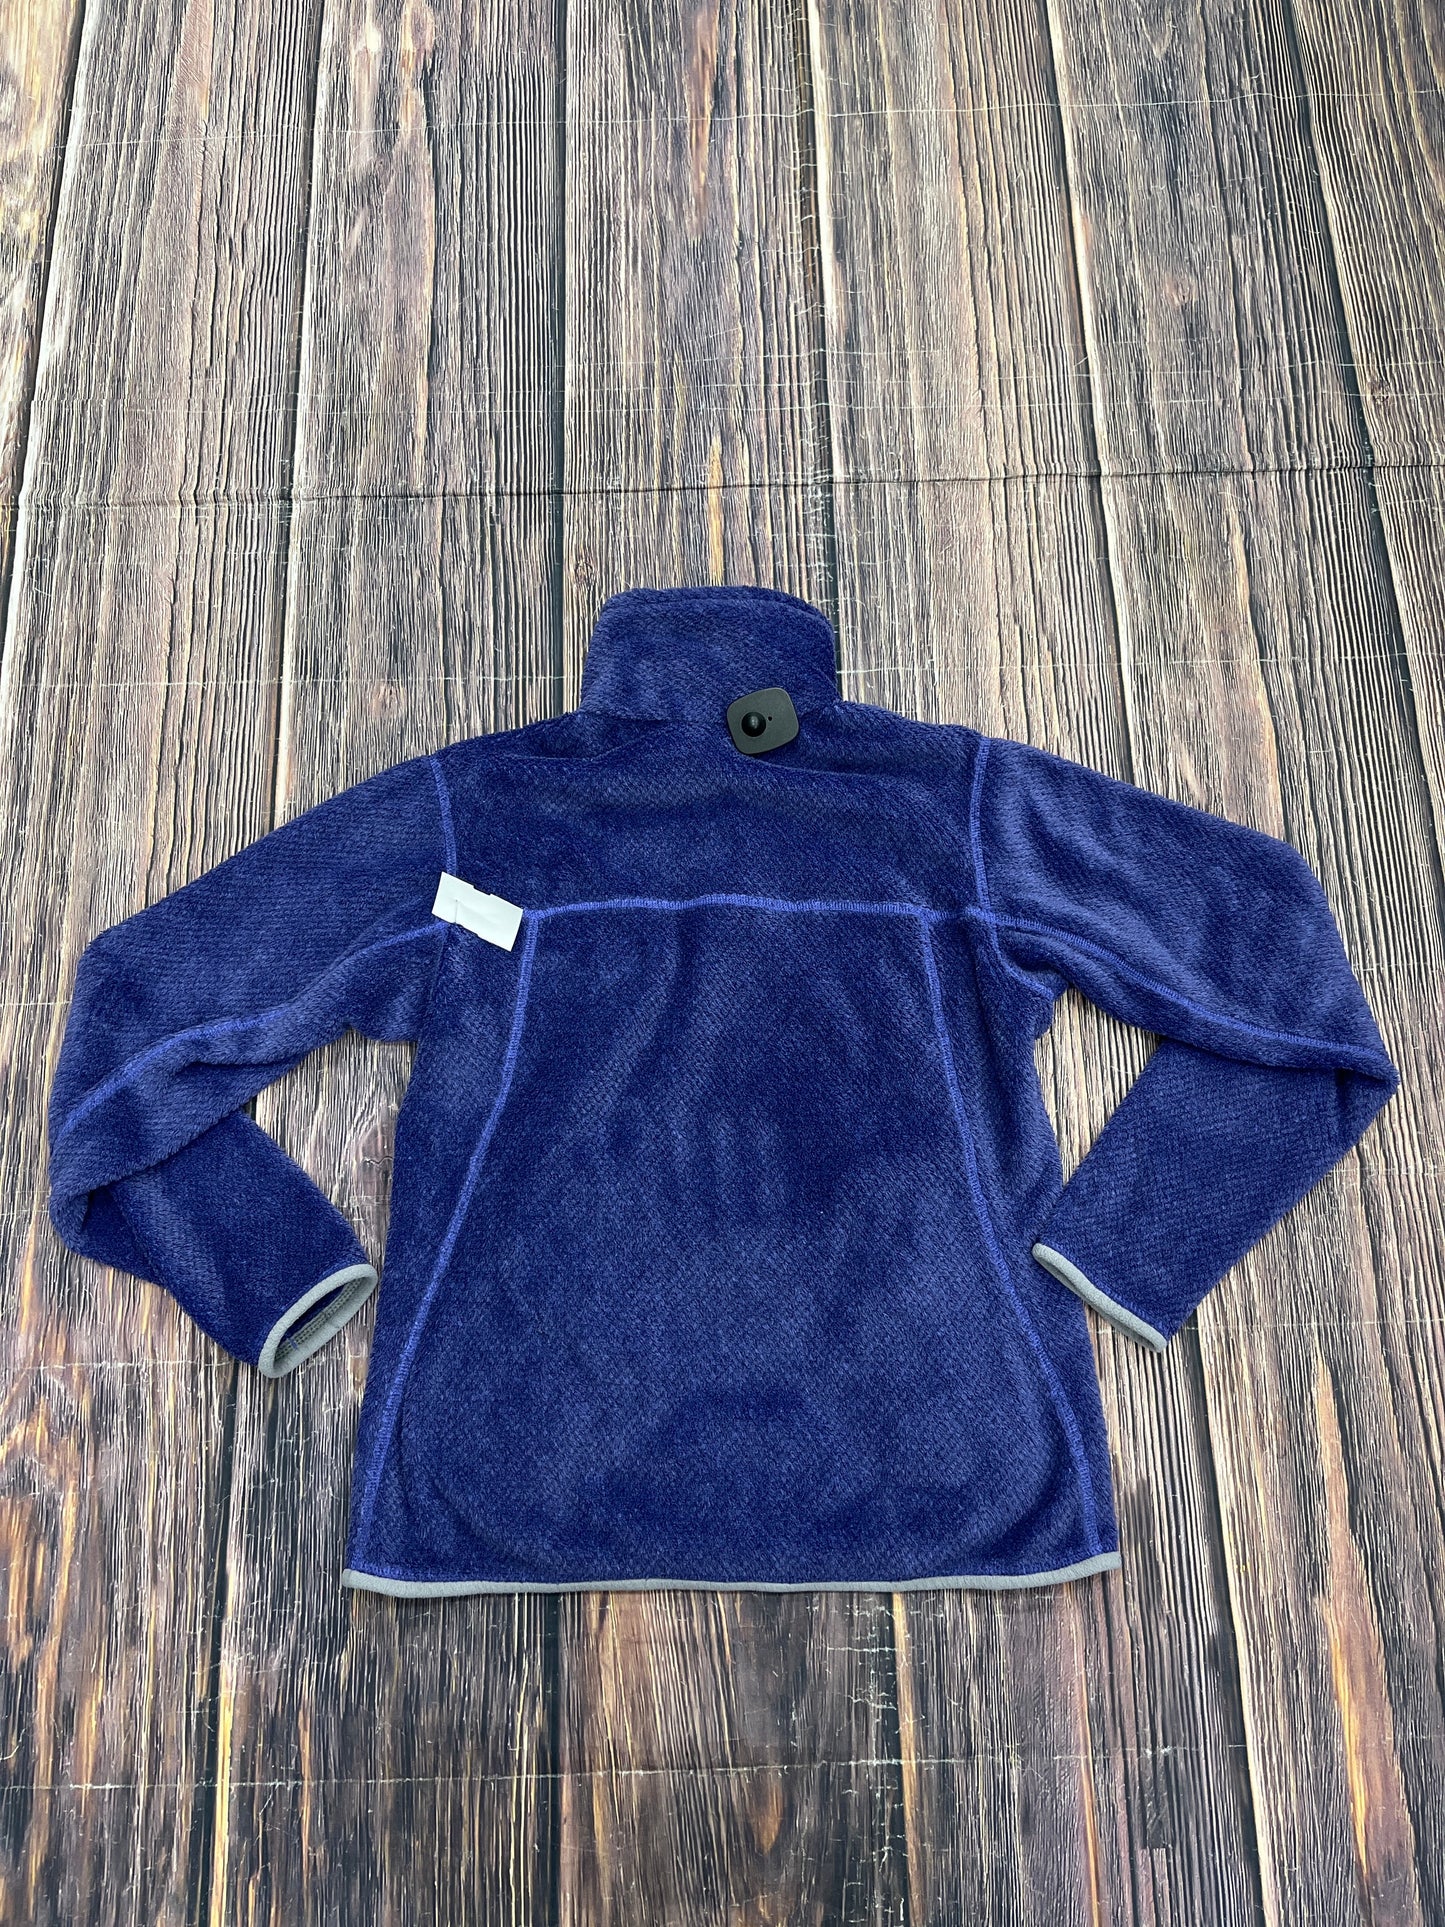 Sweatshirt Crewneck By Patagonia  Size: S